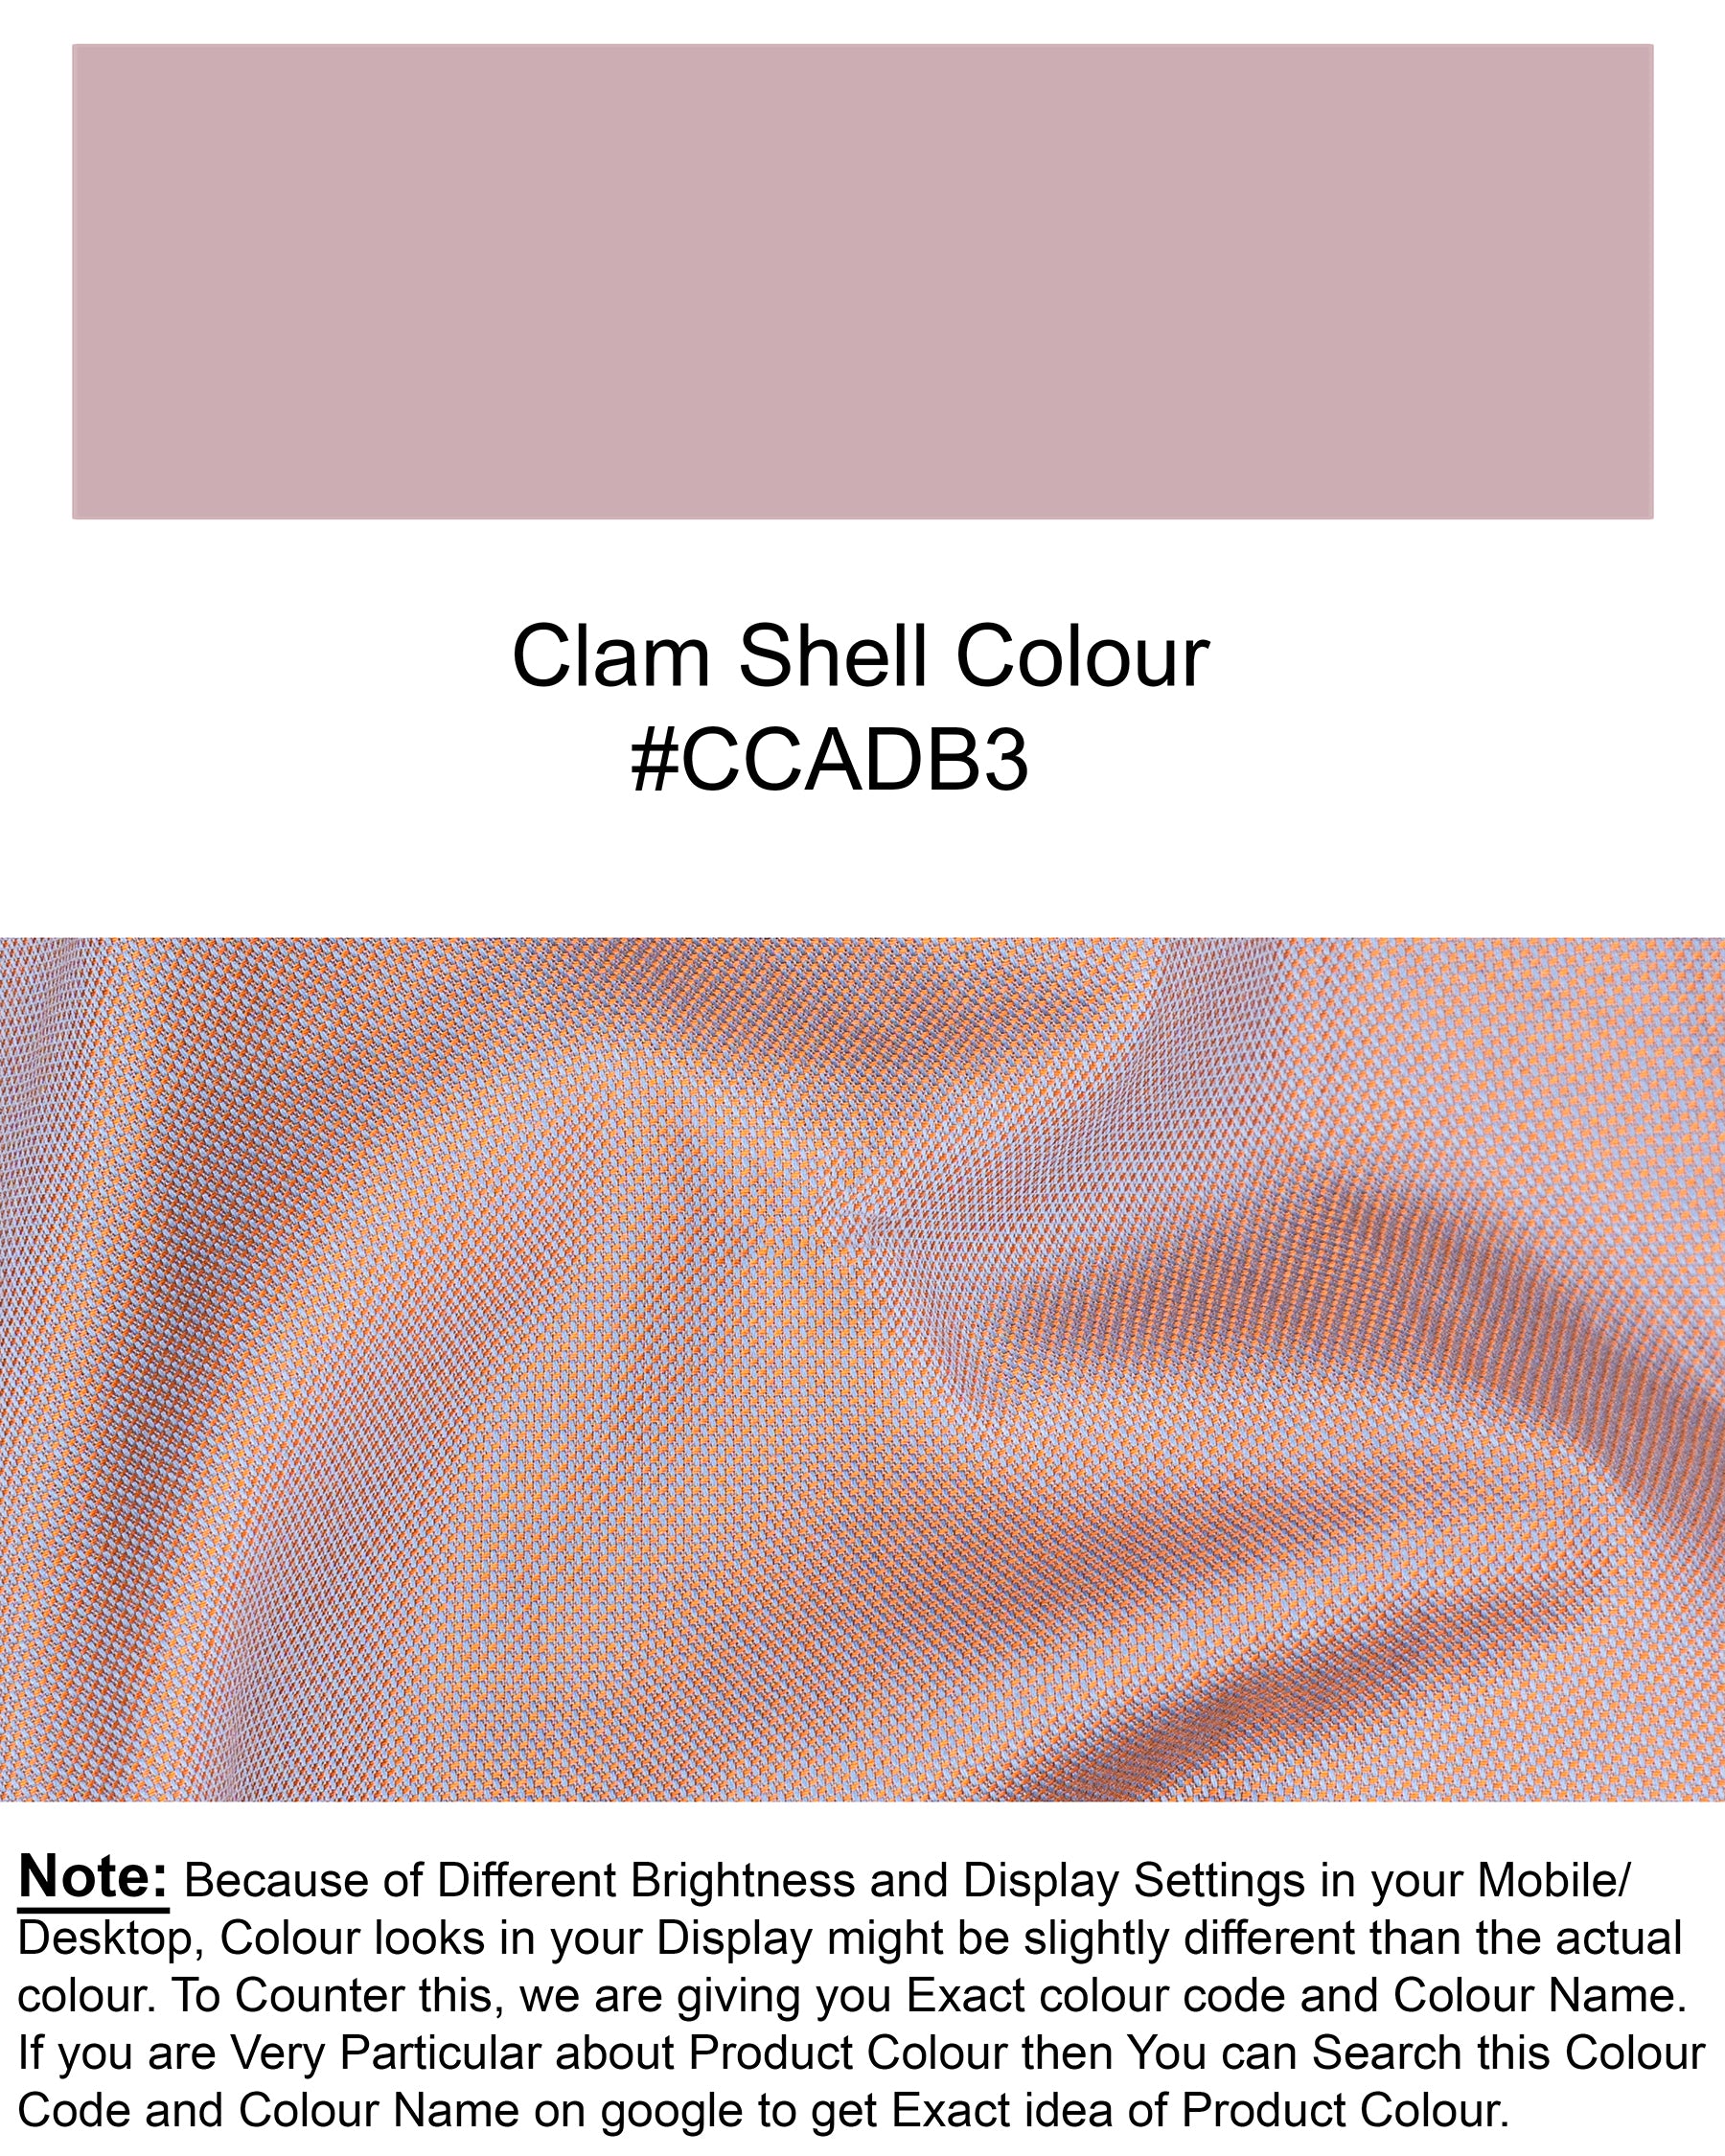 Clam Shell Dobby Diagonal Textured Premium Giza Cotton Shirt 6565-CA-38,6565-CA-38,6565-CA-39,6565-CA-39,6565-CA-40,6565-CA-40,6565-CA-42,6565-CA-42,6565-CA-44,6565-CA-44,6565-CA-46,6565-CA-46,6565-CA-48,6565-CA-48,6565-CA-50,6565-CA-50,6565-CA-52,6565-CA-52